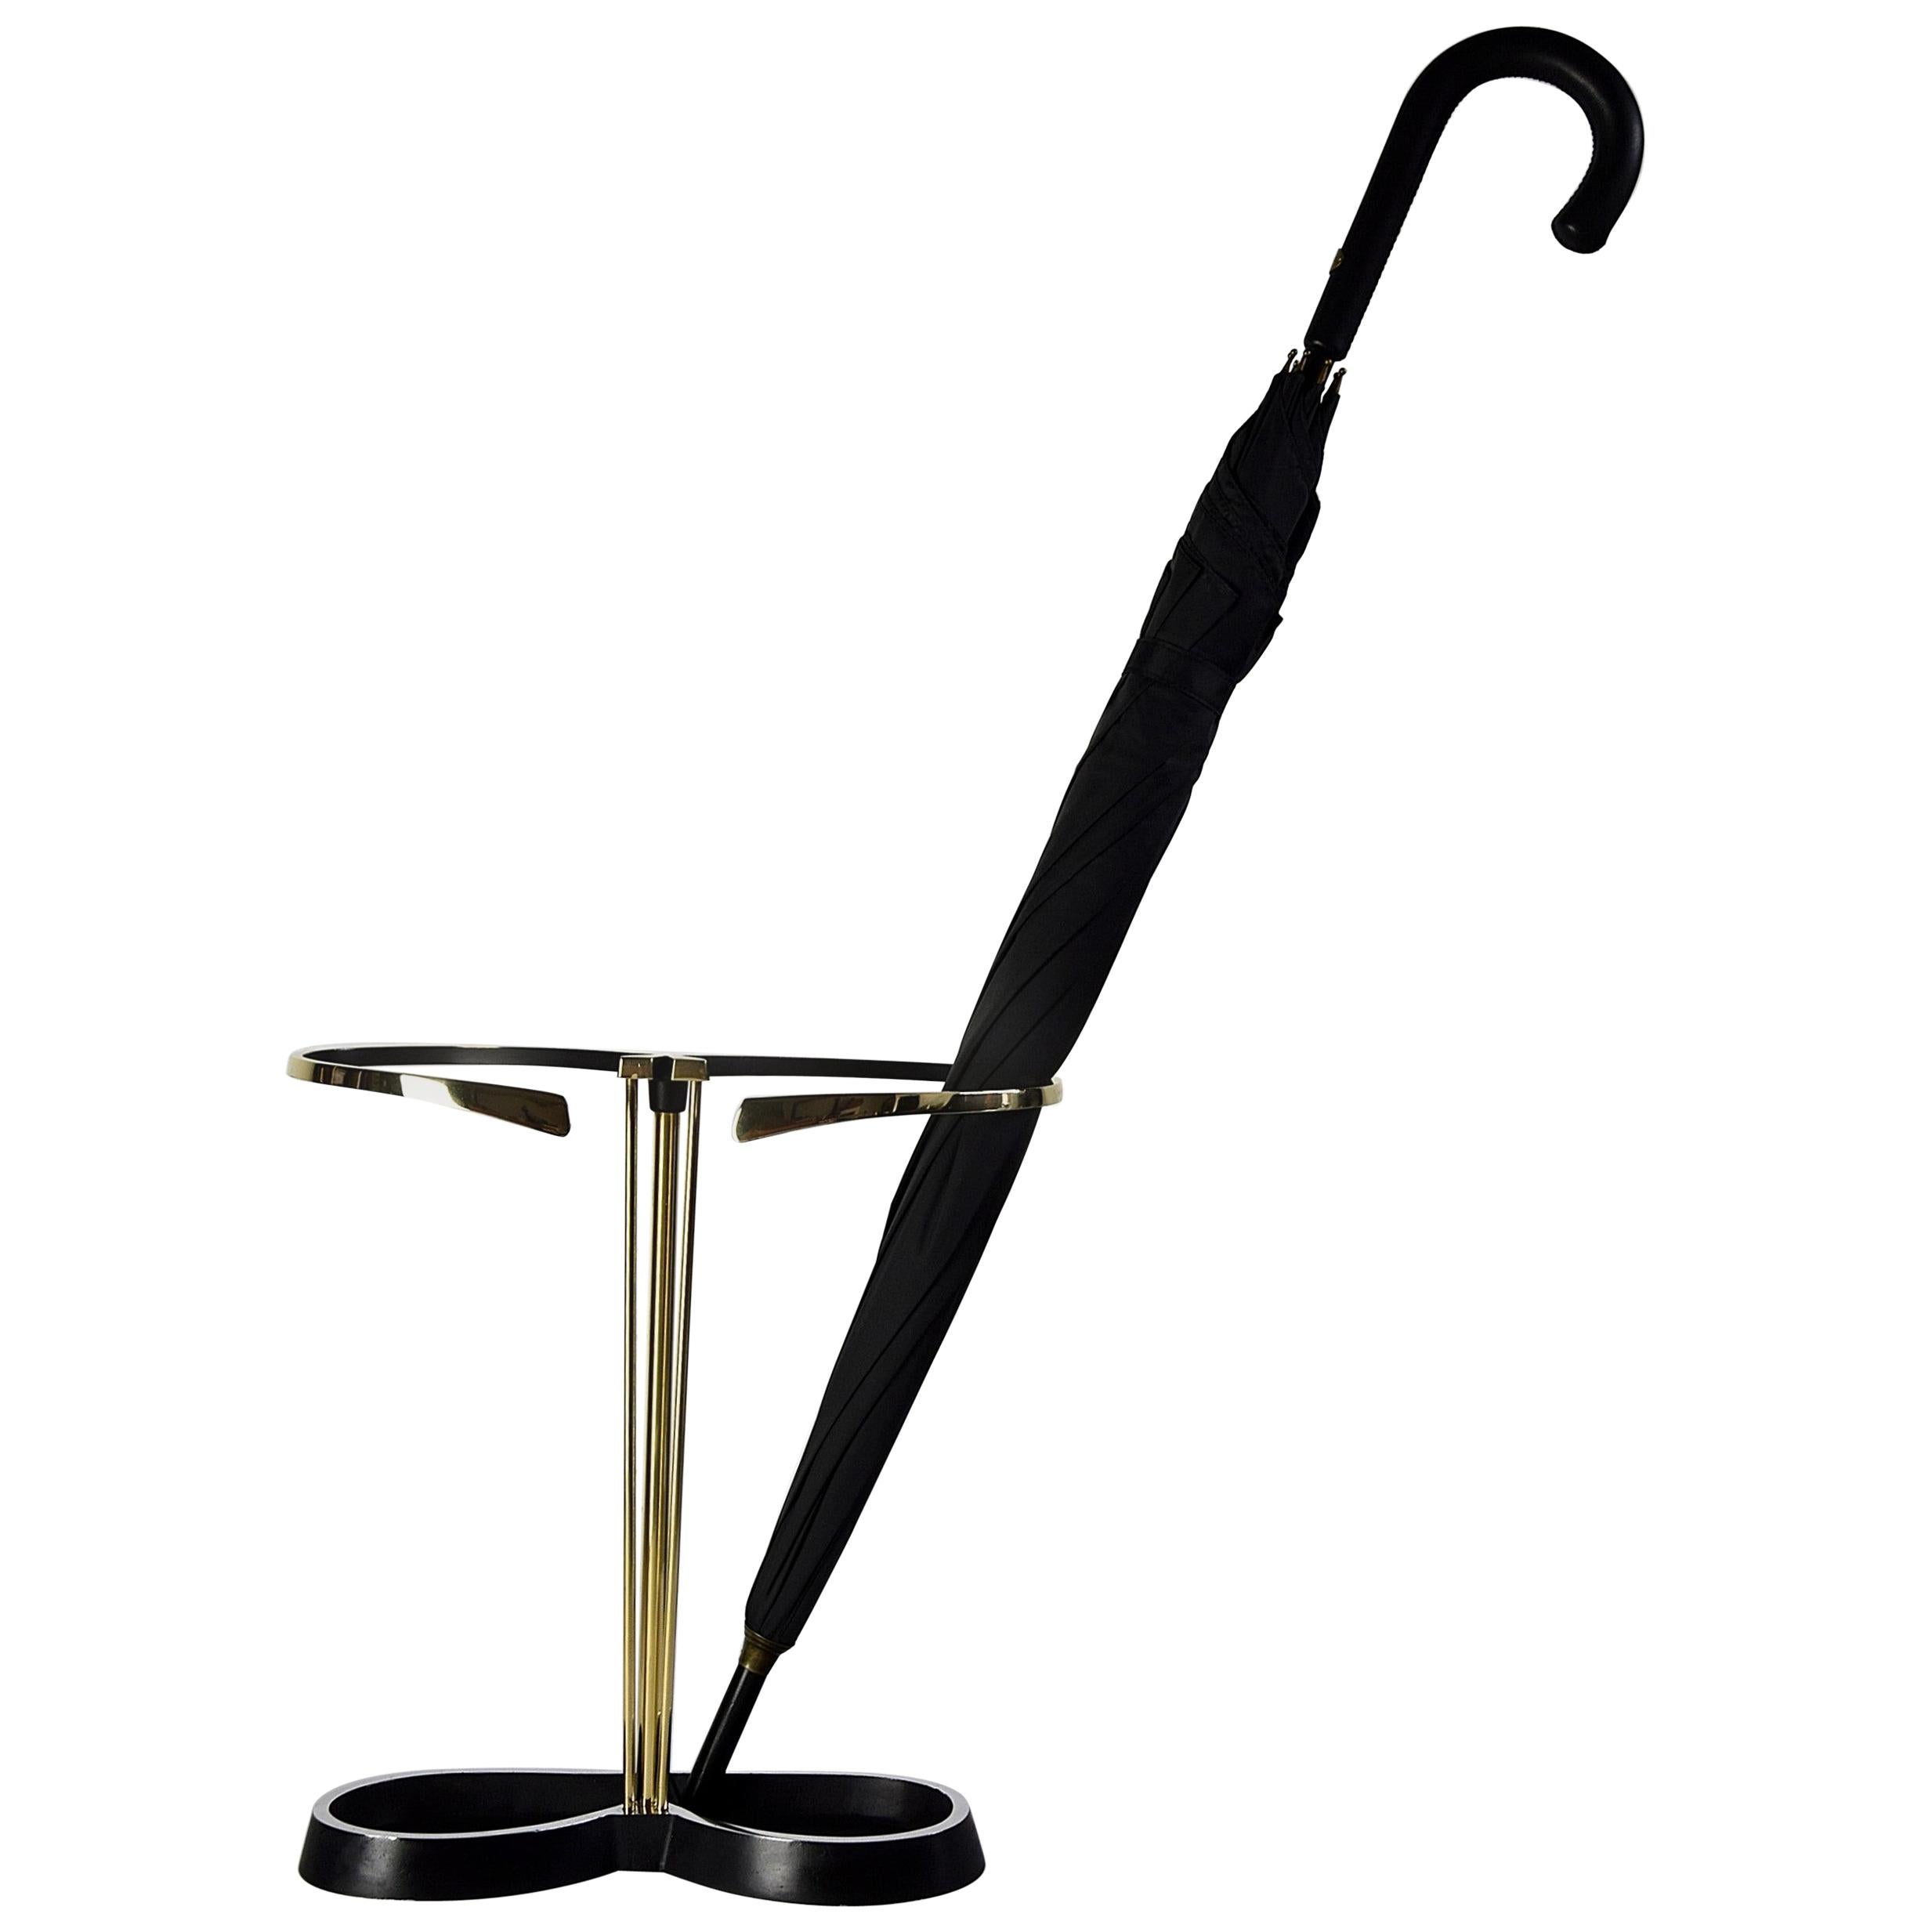 The Moderns Brass and Black Umbrella Stand